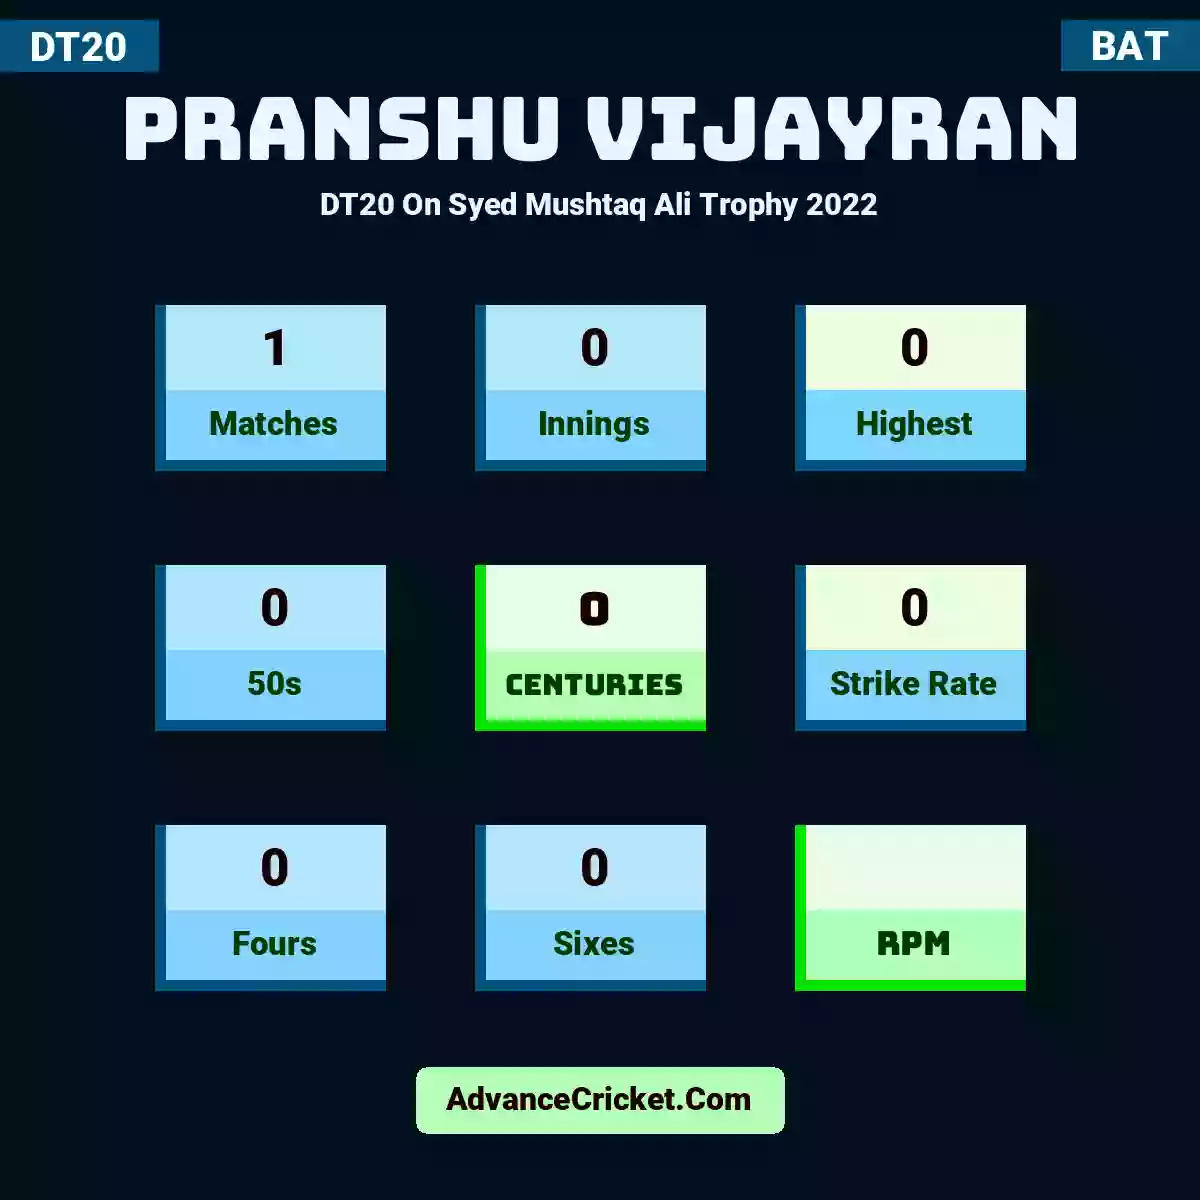 Pranshu Vijayran DT20  On Syed Mushtaq Ali Trophy 2022, Pranshu Vijayran played 1 matches, scored 0 runs as highest, 0 half-centuries, and 0 centuries, with a strike rate of 0. P.Vijayran hit 0 fours and 0 sixes.